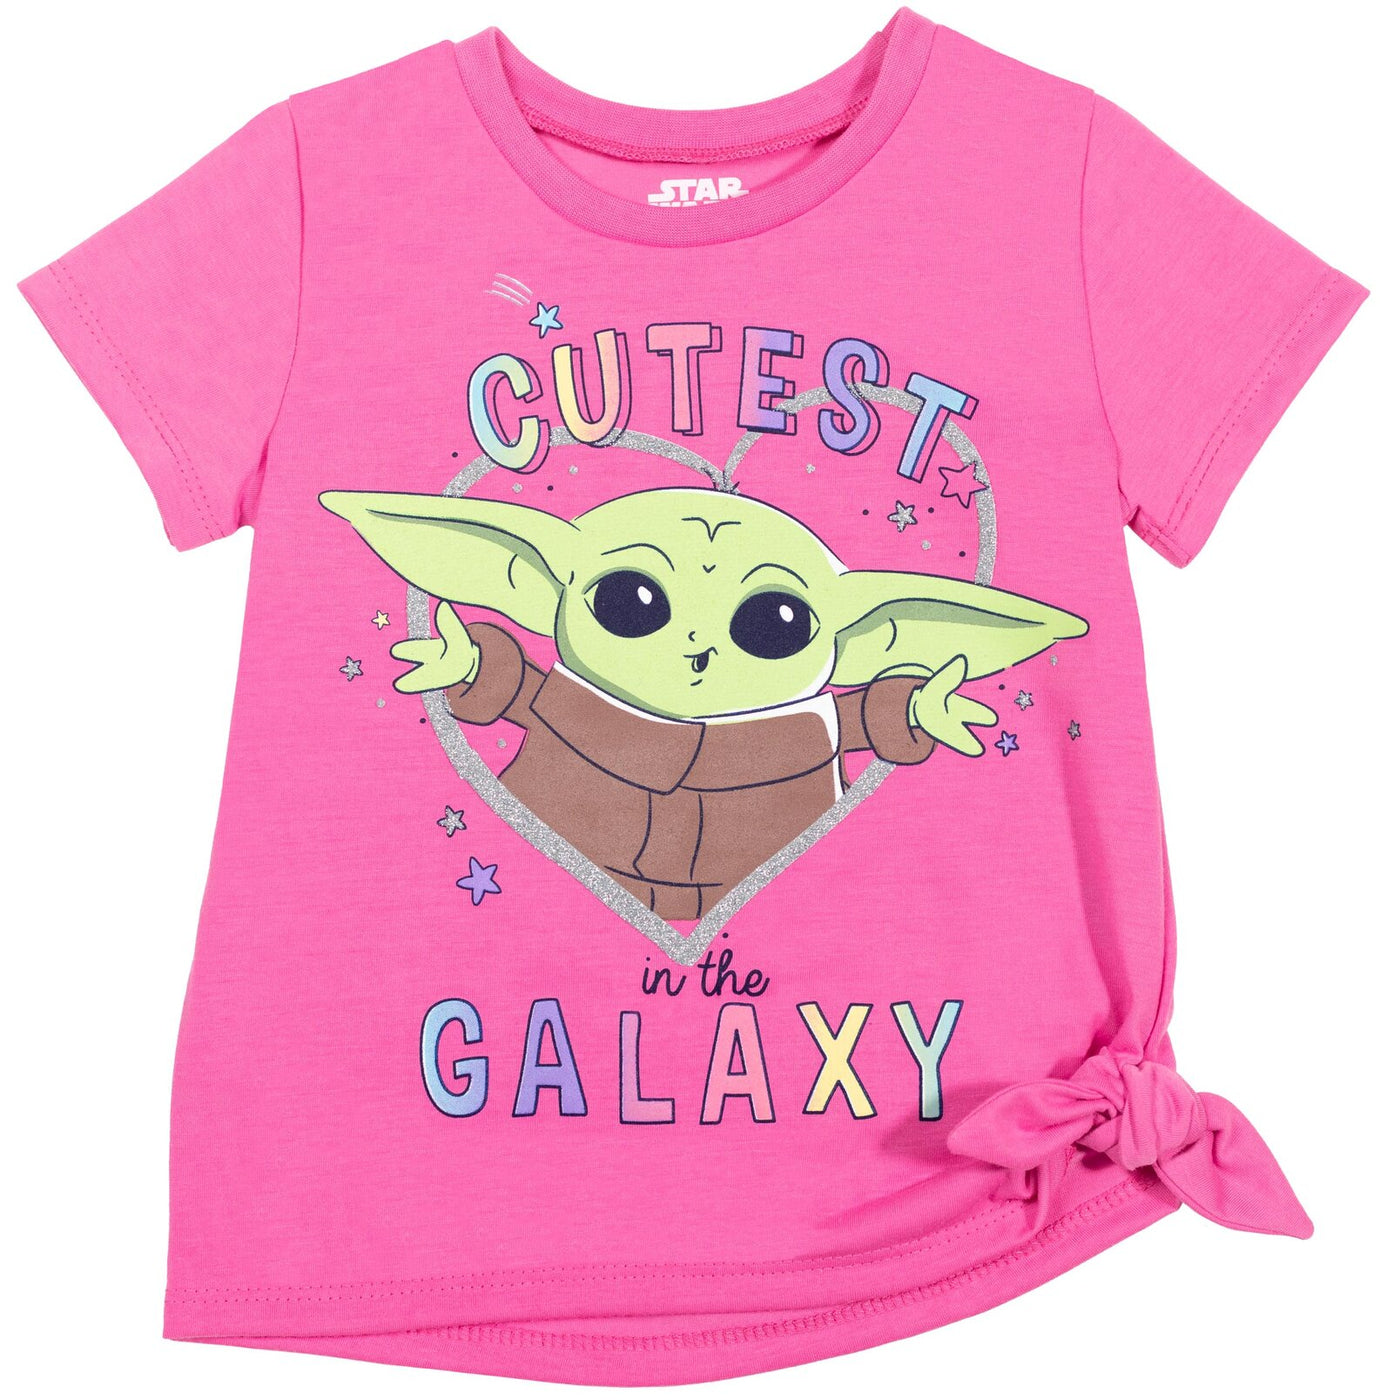 Star Wars The Mandalorian Baby Yoda T-Shirt and Leggings Outfit Set